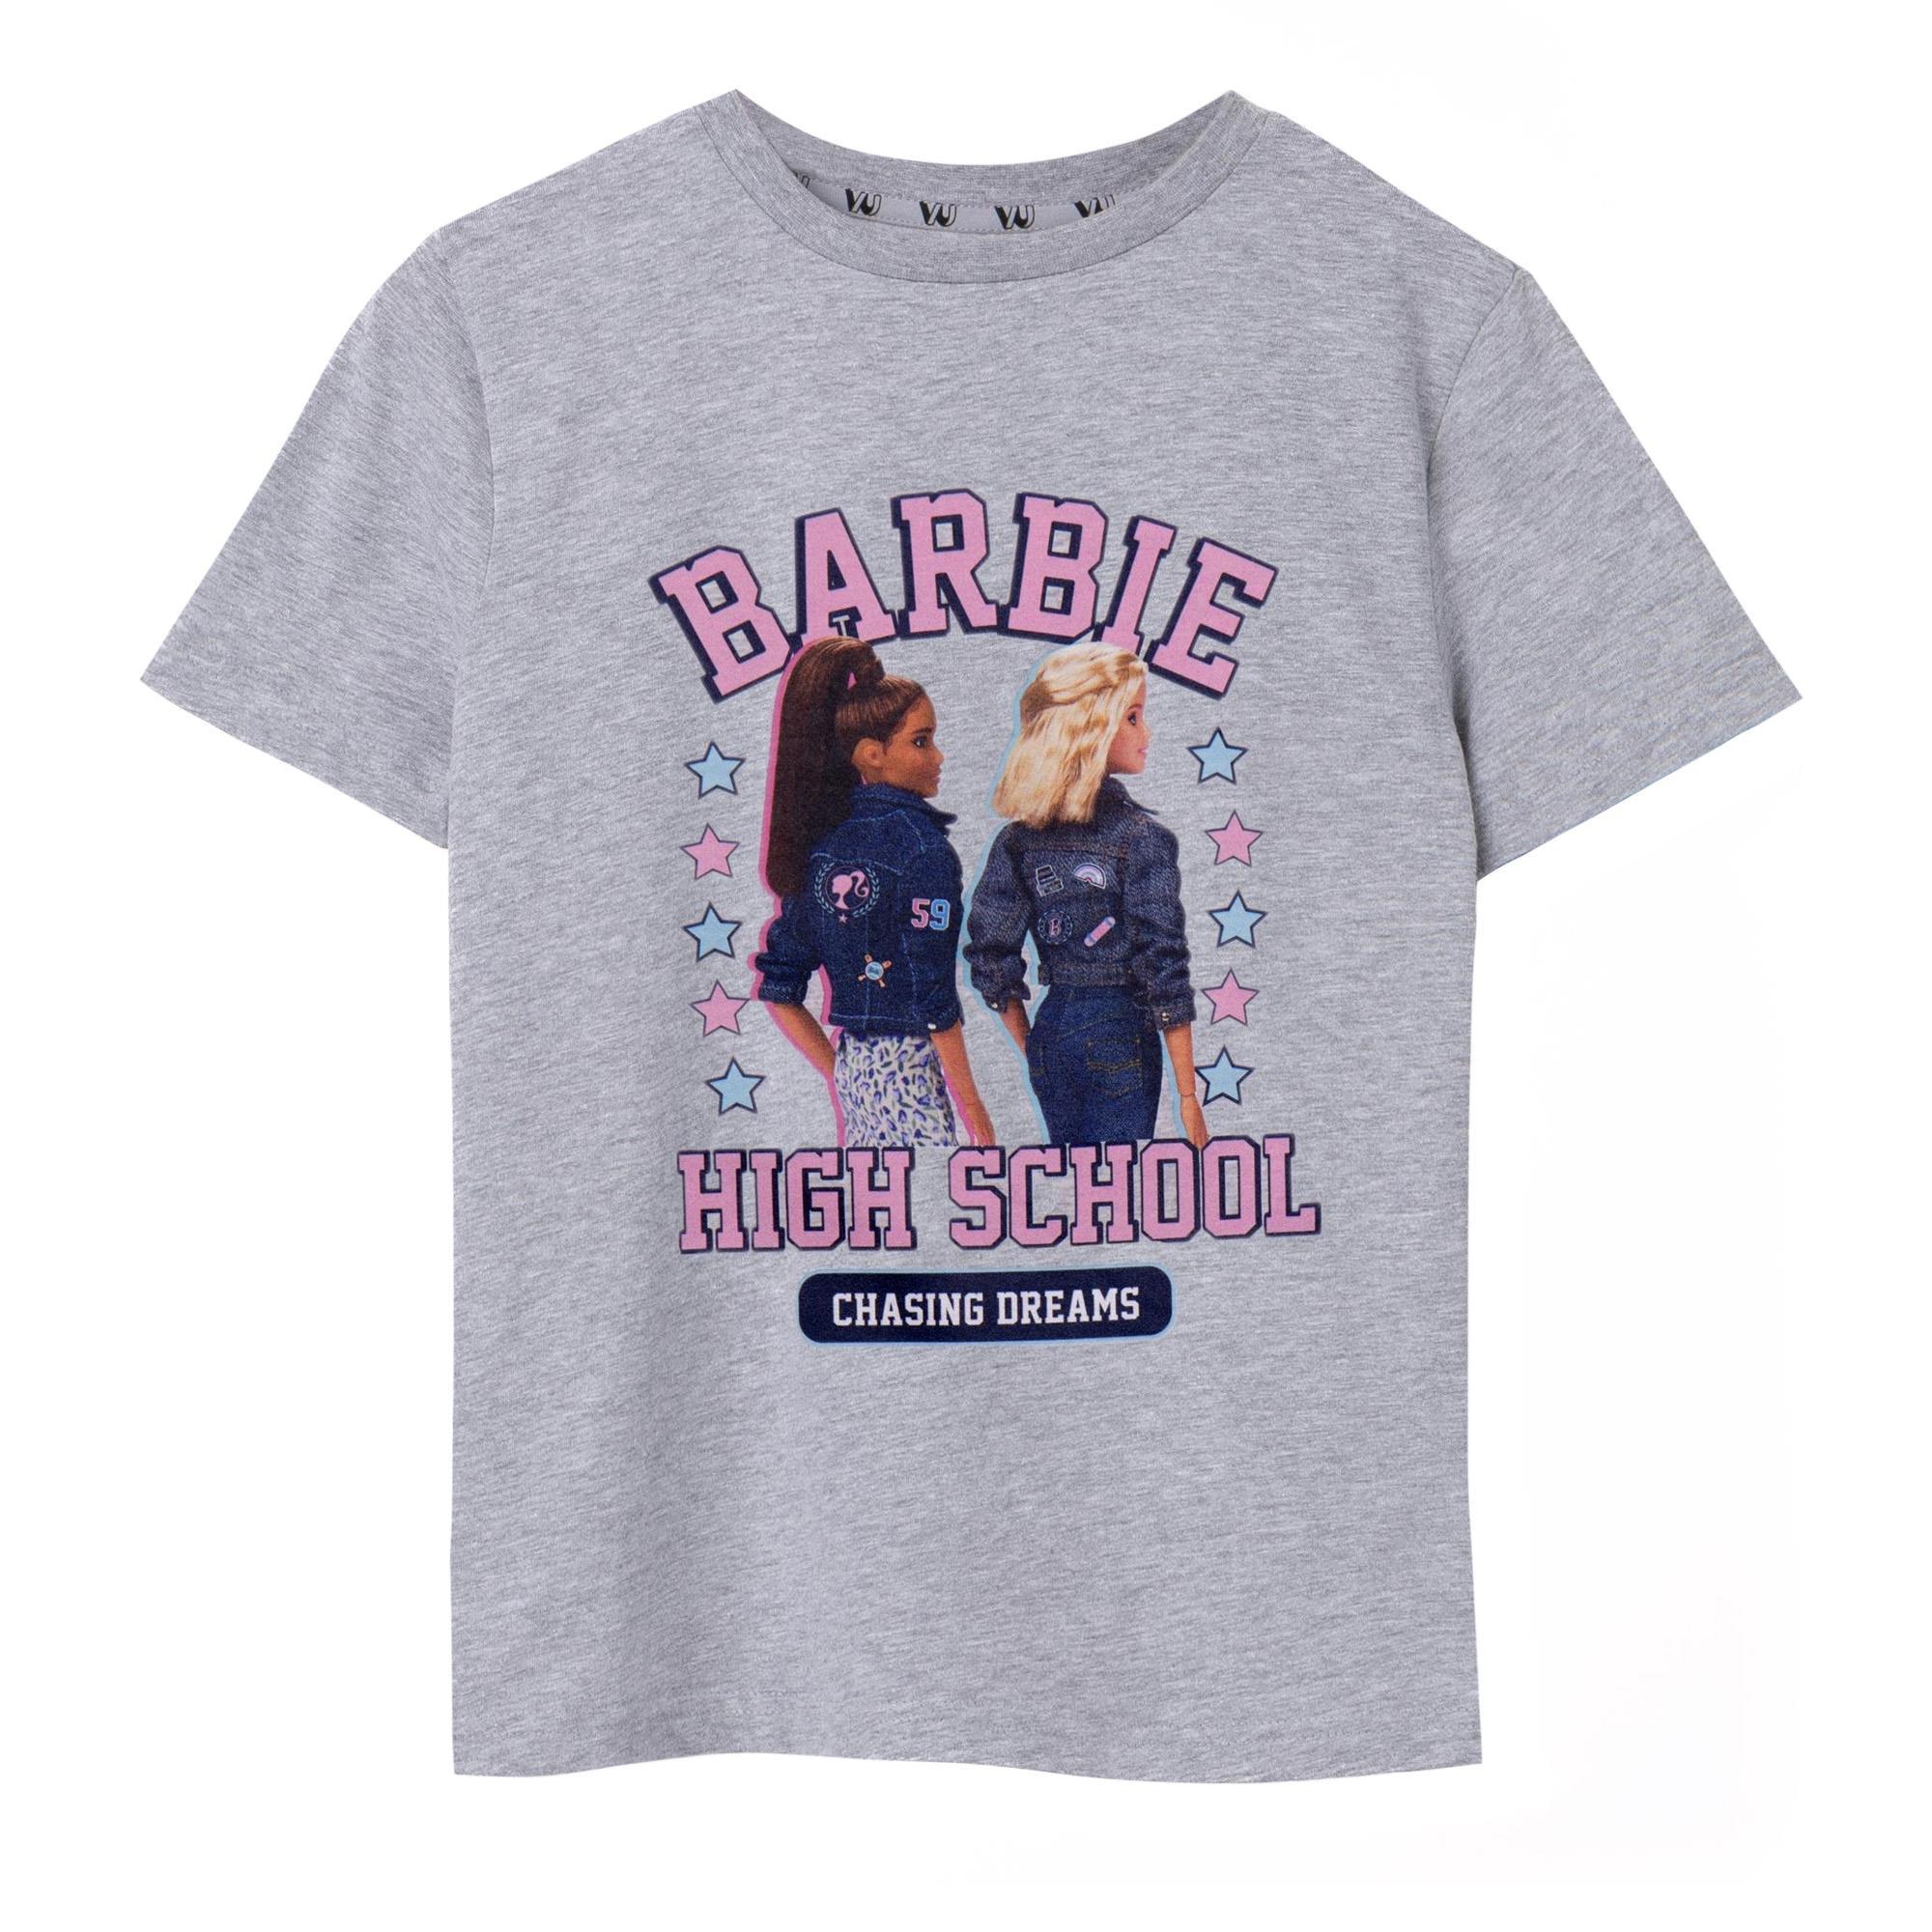 Barbie Girls High School Short-Sleeved T-Shirt (Grey Marl) (5-6 Years)